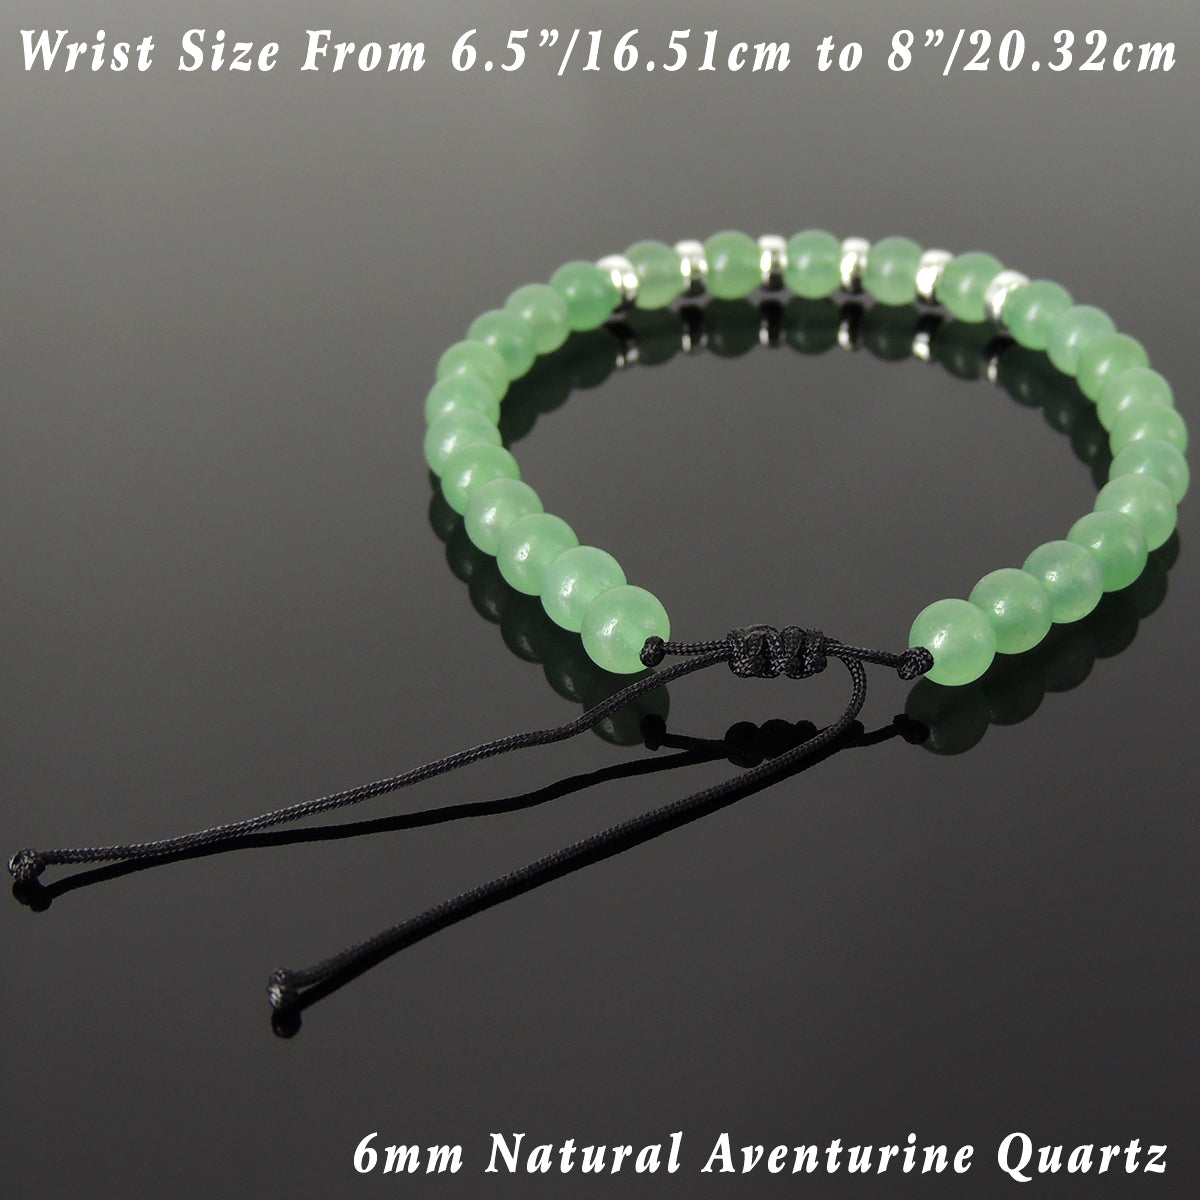 6mm Aventurine Quartz Adjustable Braided Gemstone Bracelet with S925 Sterling Silver Spacers - Handmade by Gem & Silver BR1159